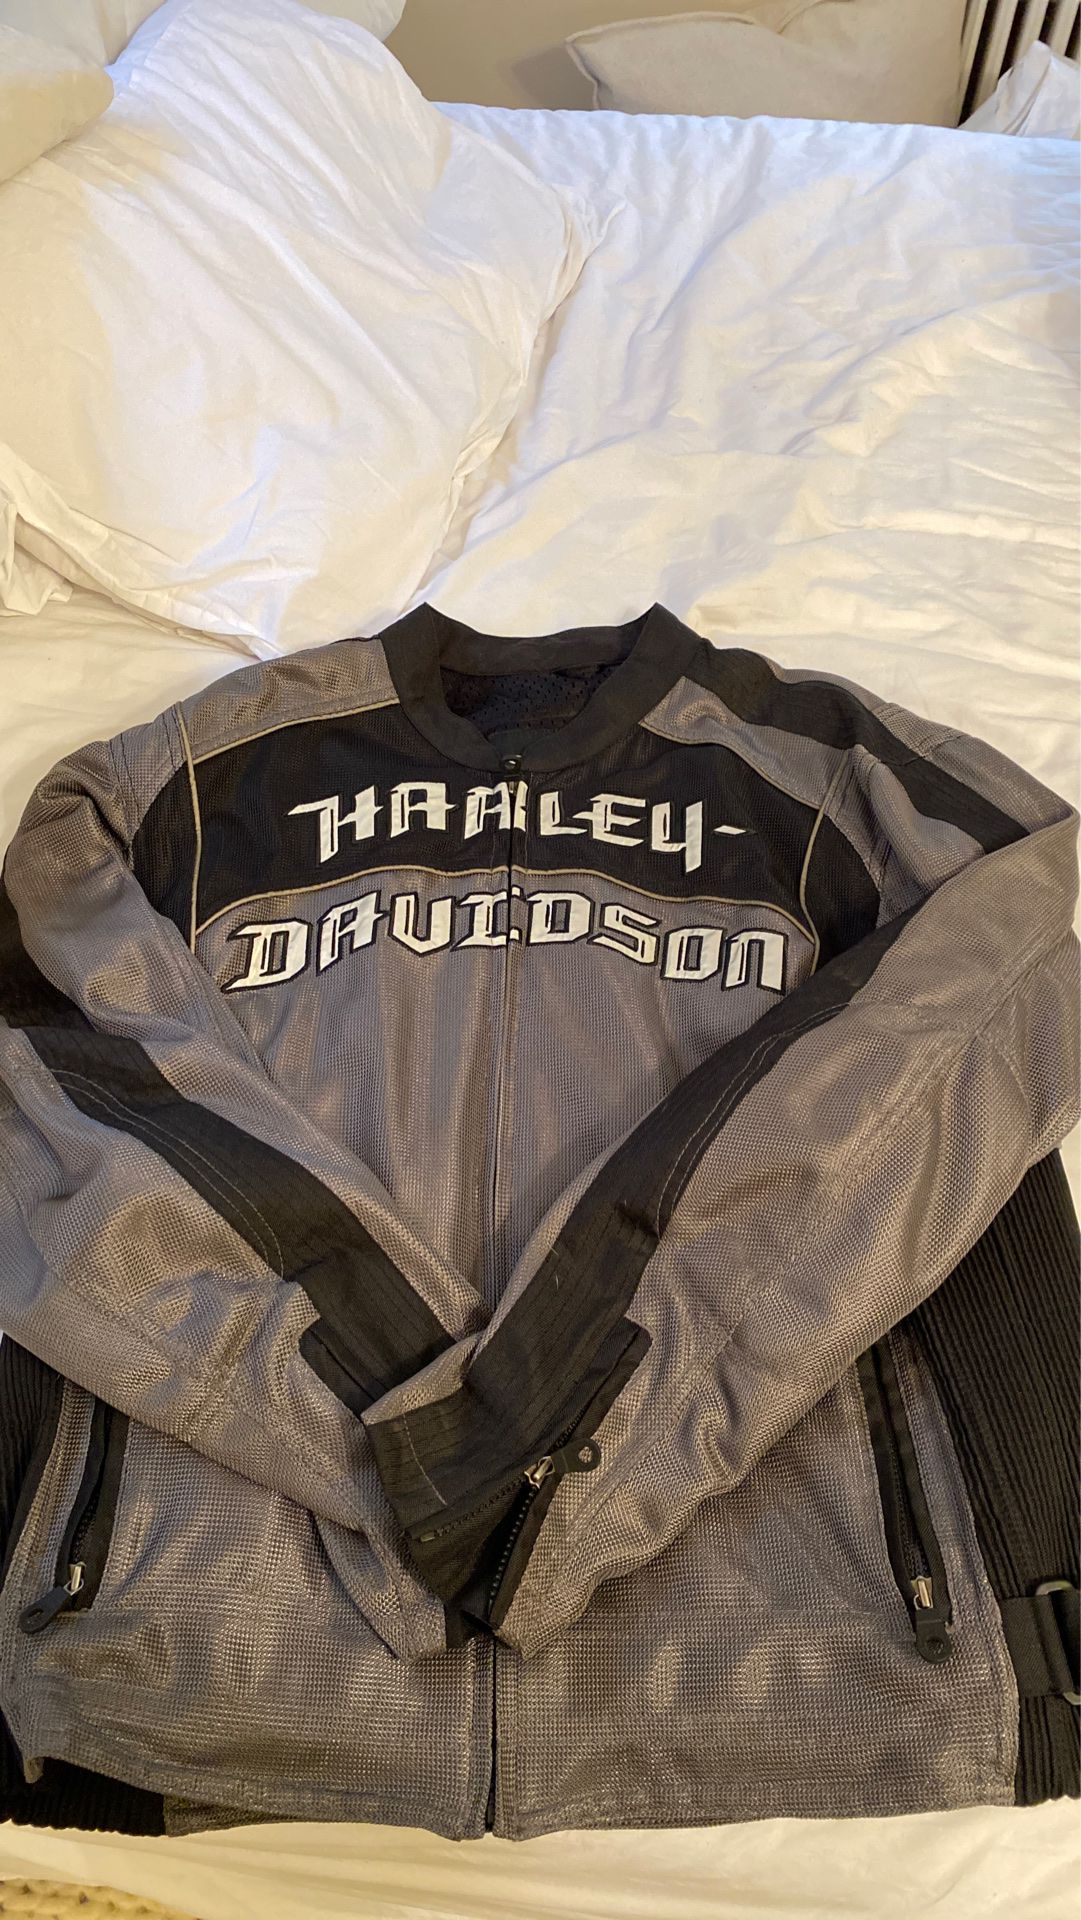 HARLEY DAVIDSON riding jacket